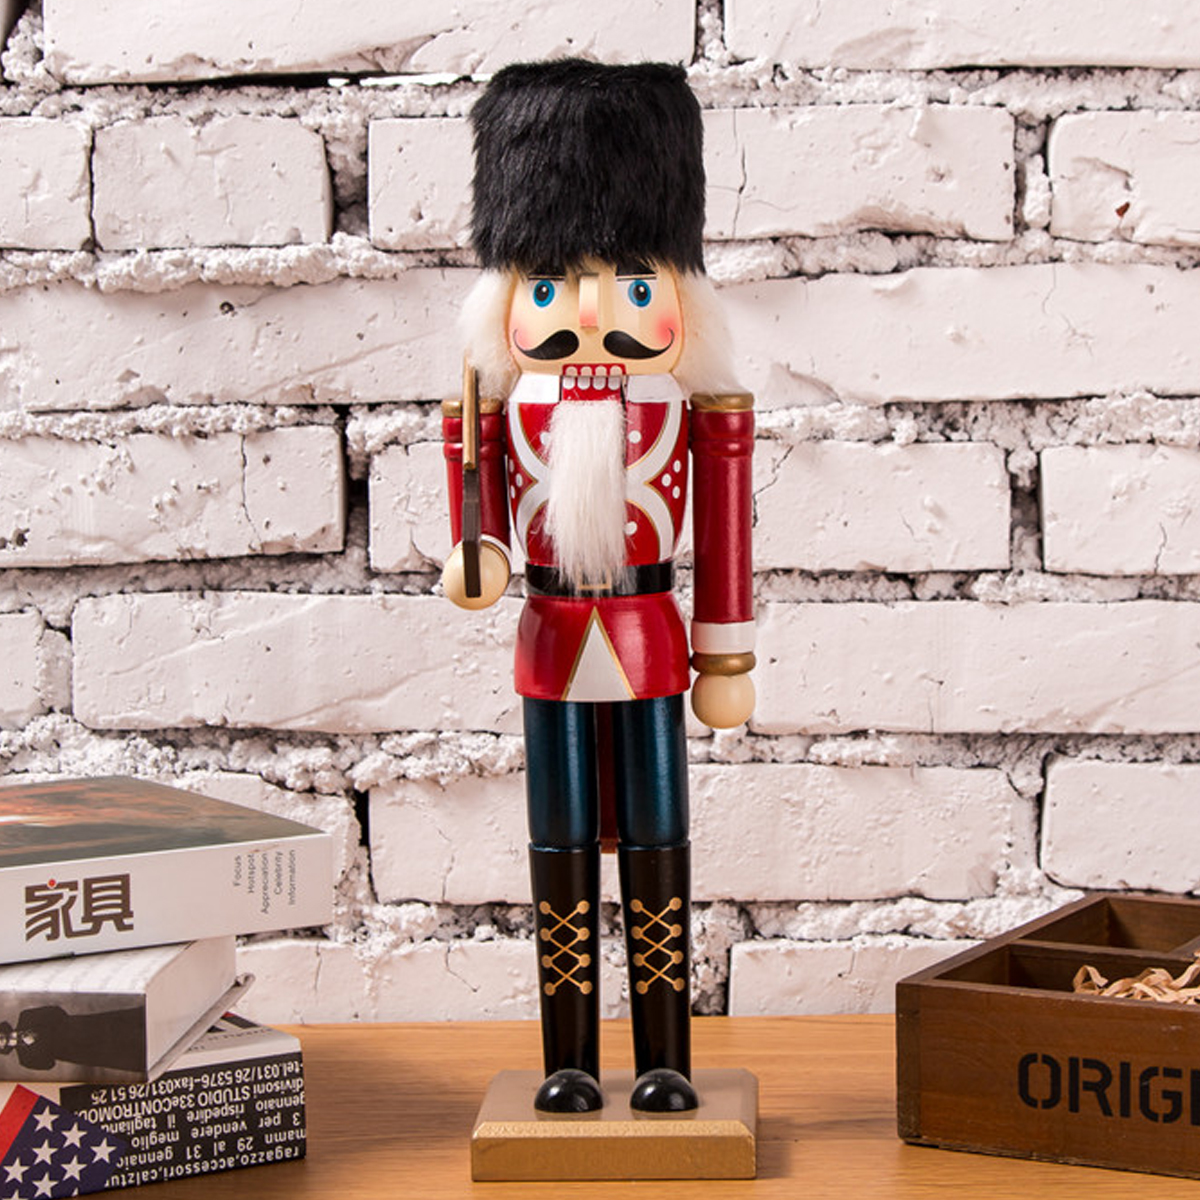 35cm-Wooden-Nutcracker-Doll-Soldier-Vintage-Handcraft-Decoration-Christmas-Gifts-1398445-4